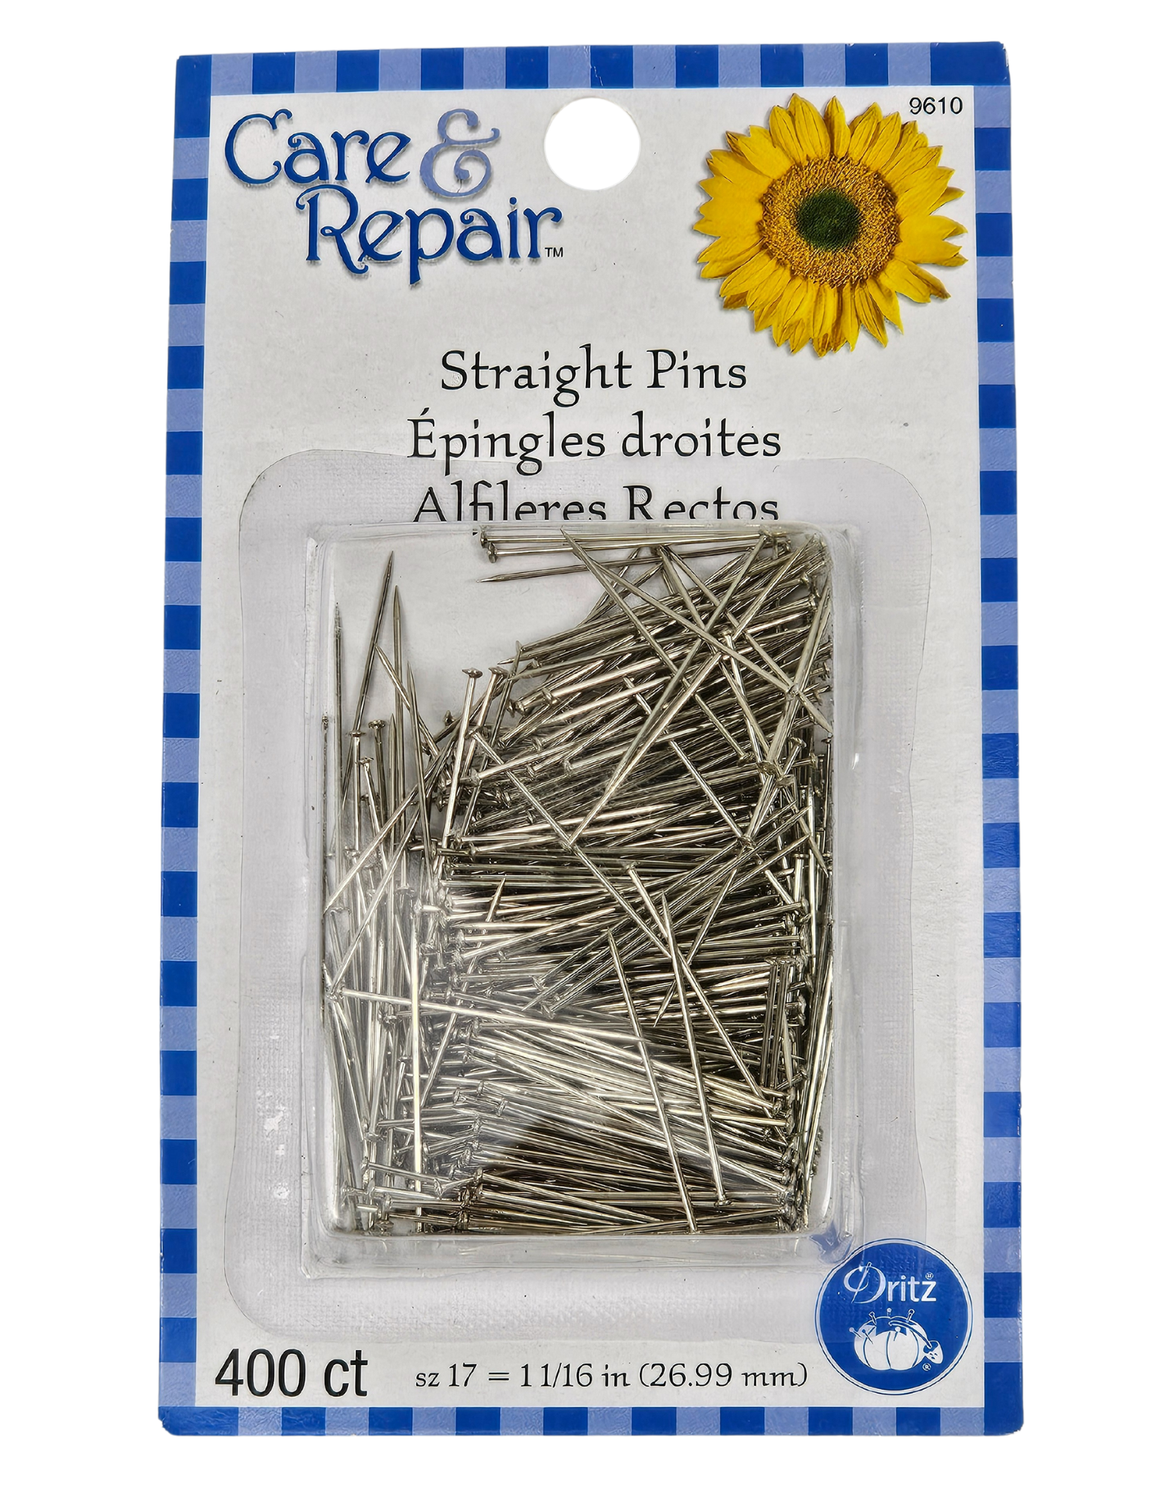 Straight Pins